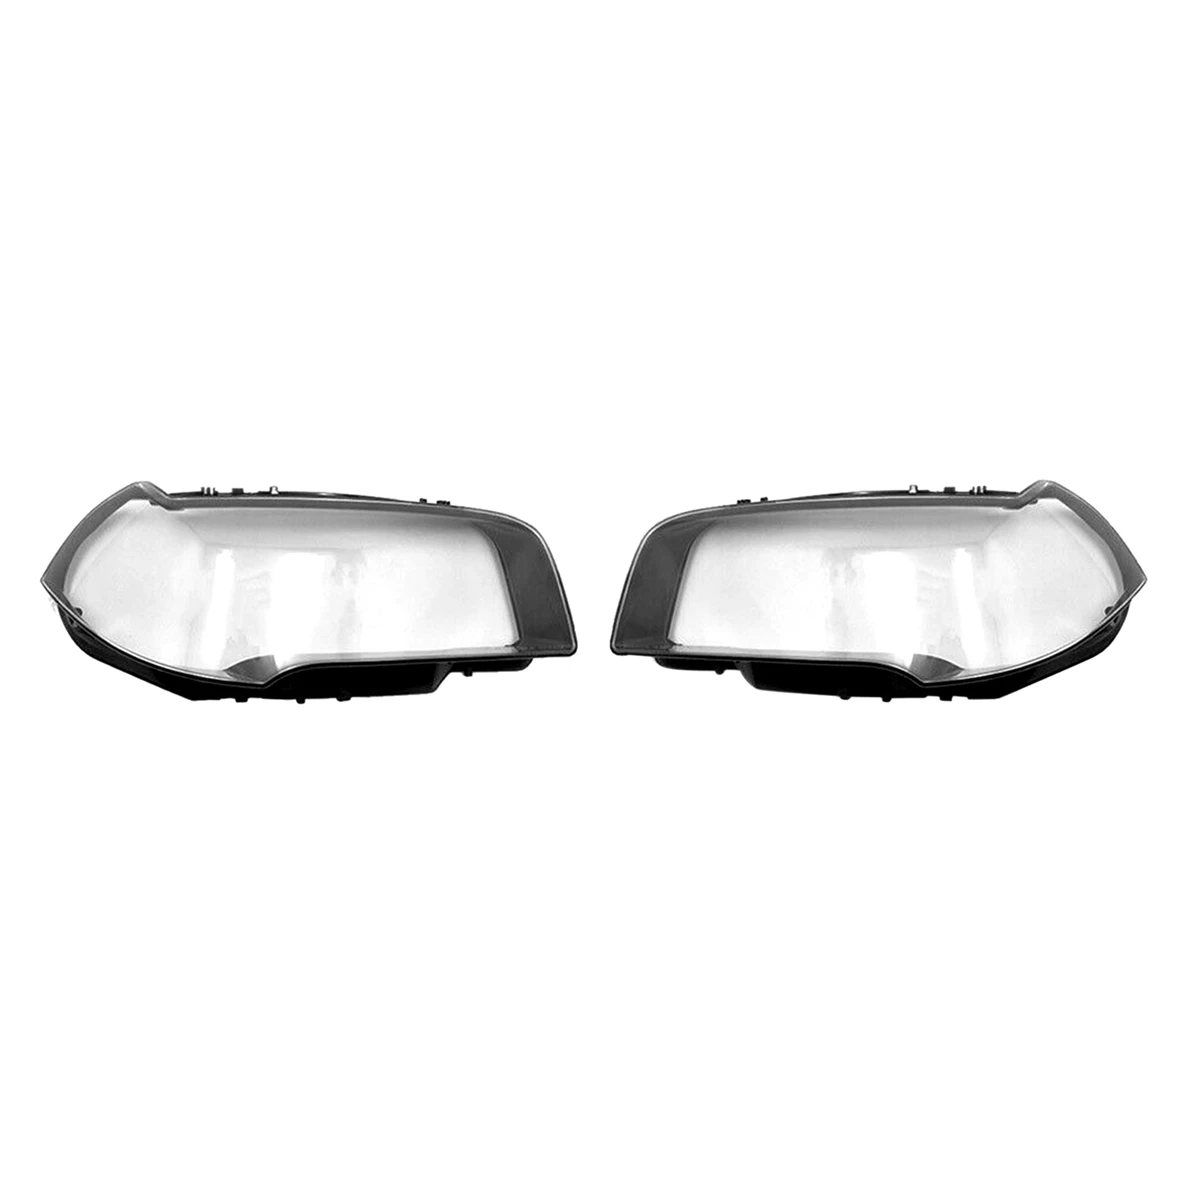 

Крышка для автомобильных фар, прозрачная крышка для объектива, абажур для передних фар, для X3, E83, 2003-2011